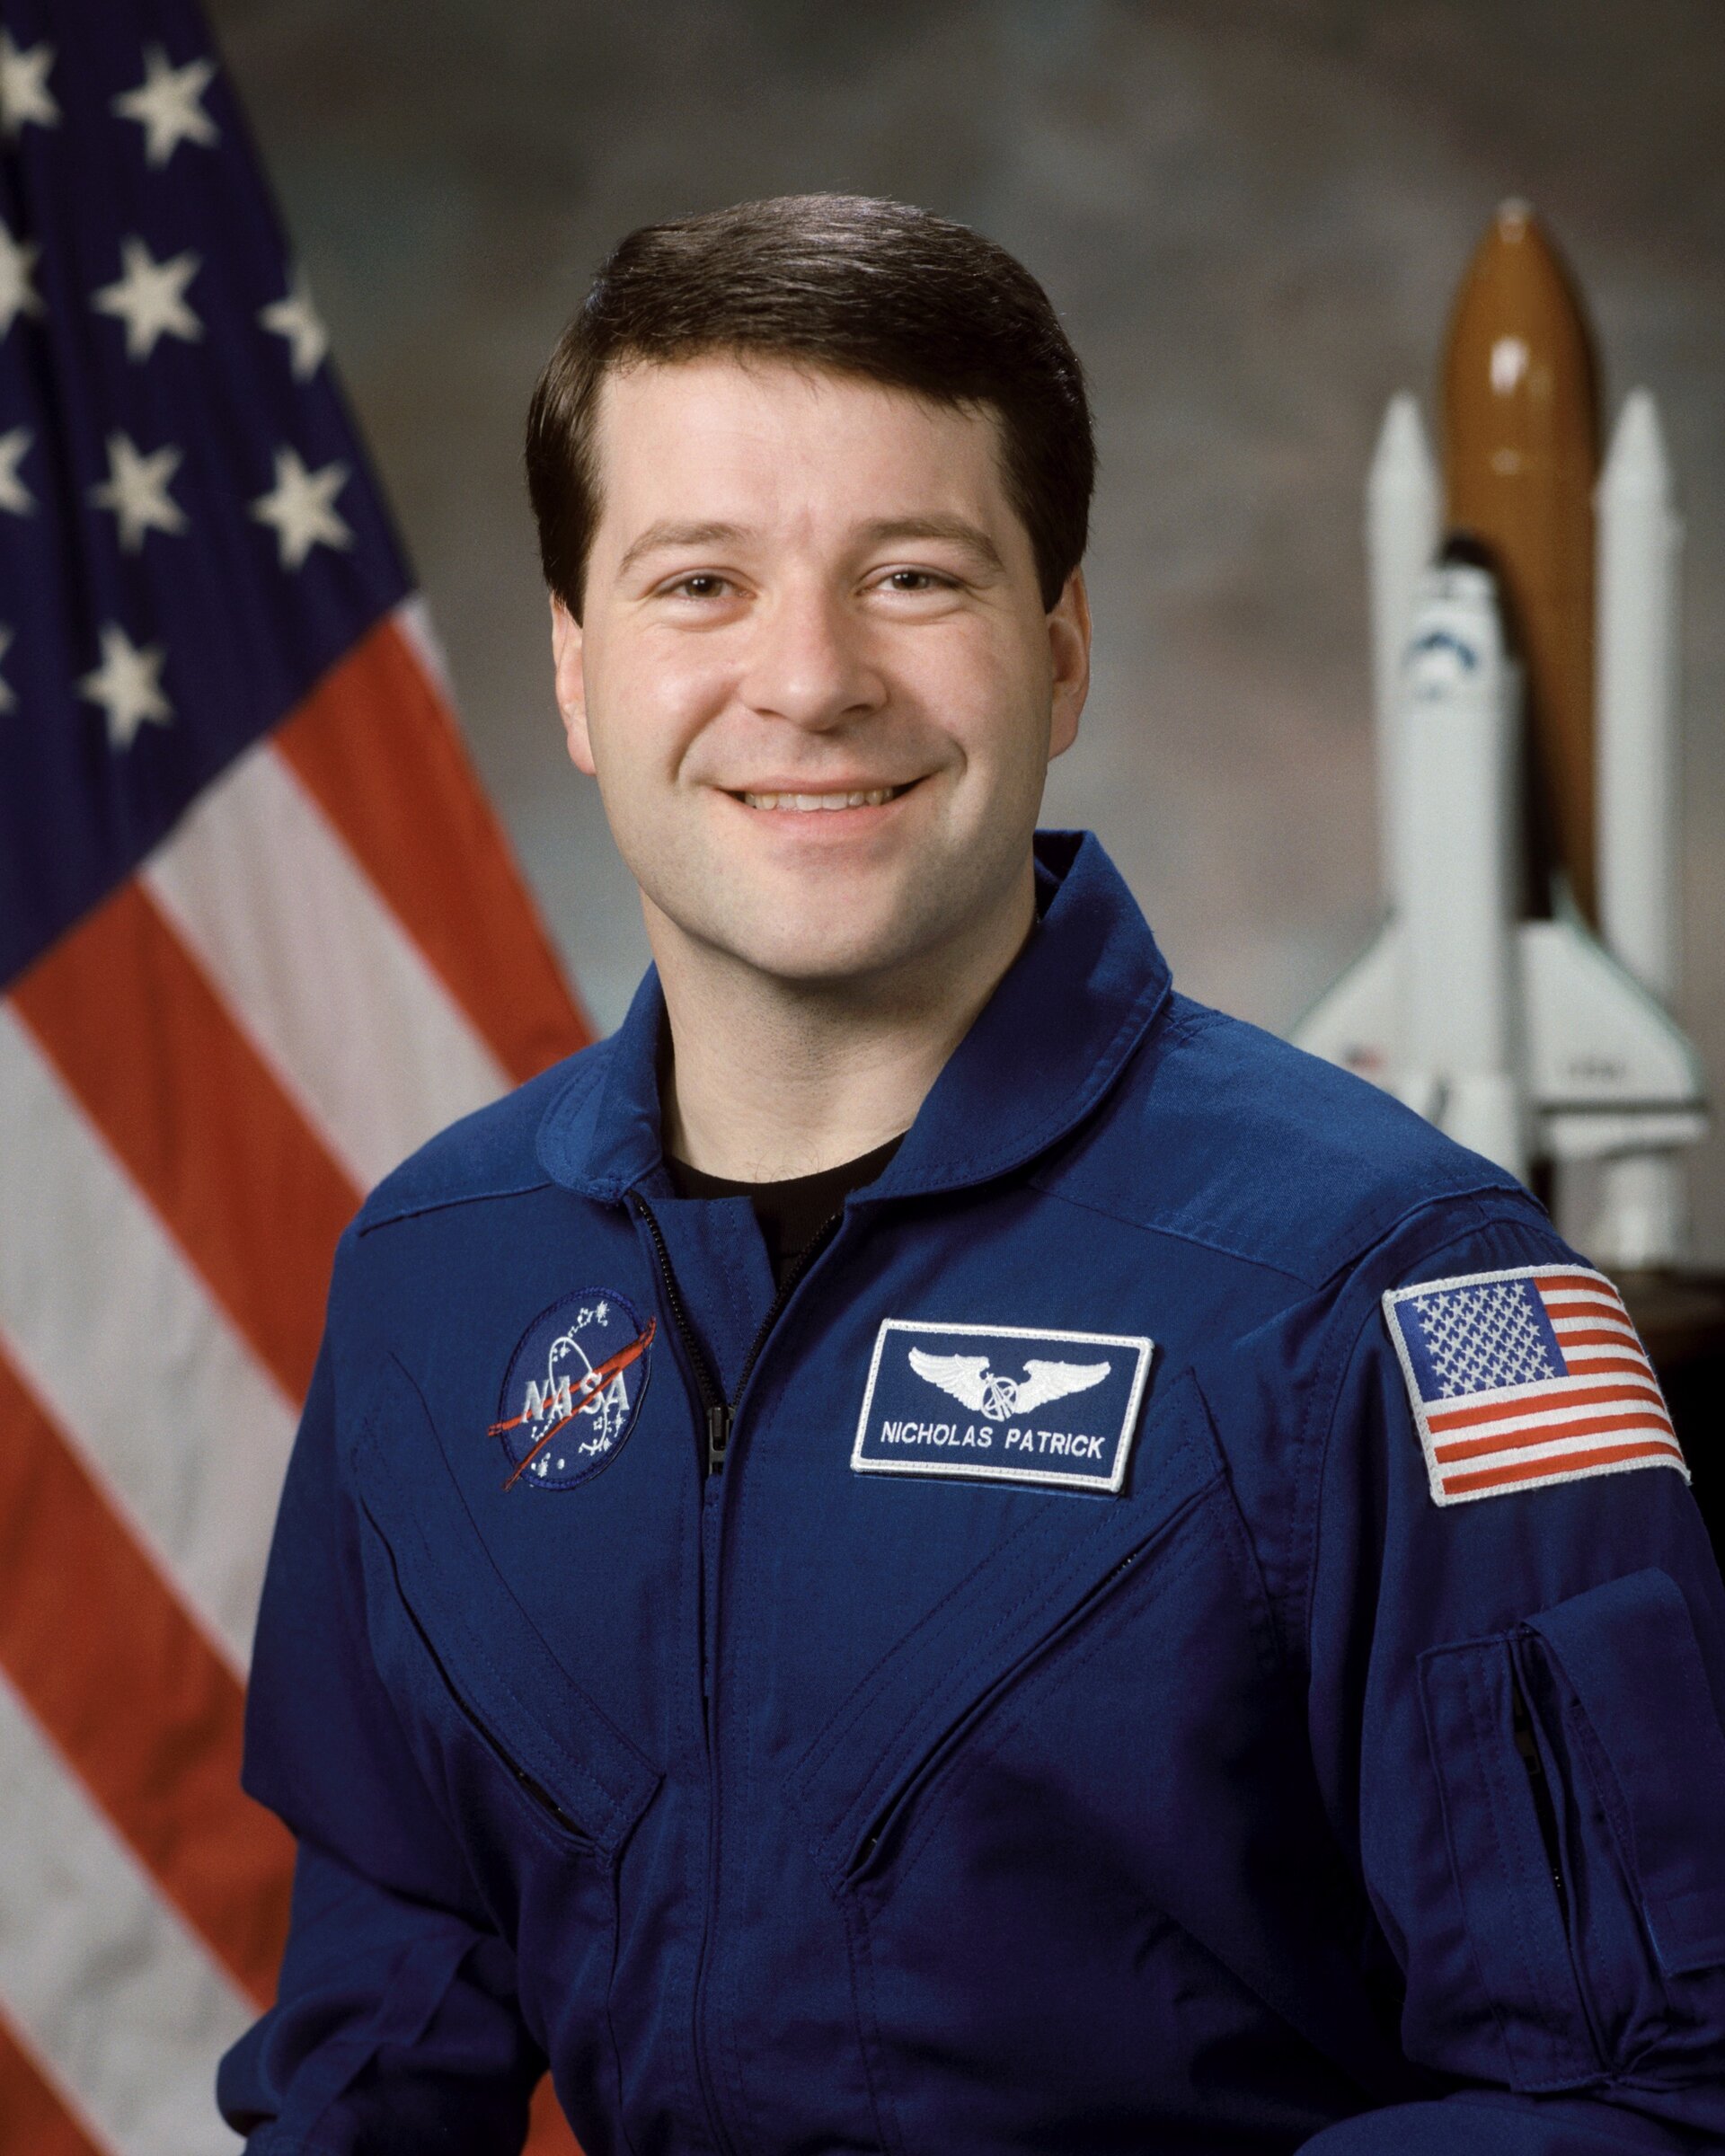 STS-116 Mission Specialist Nicholas Patrick